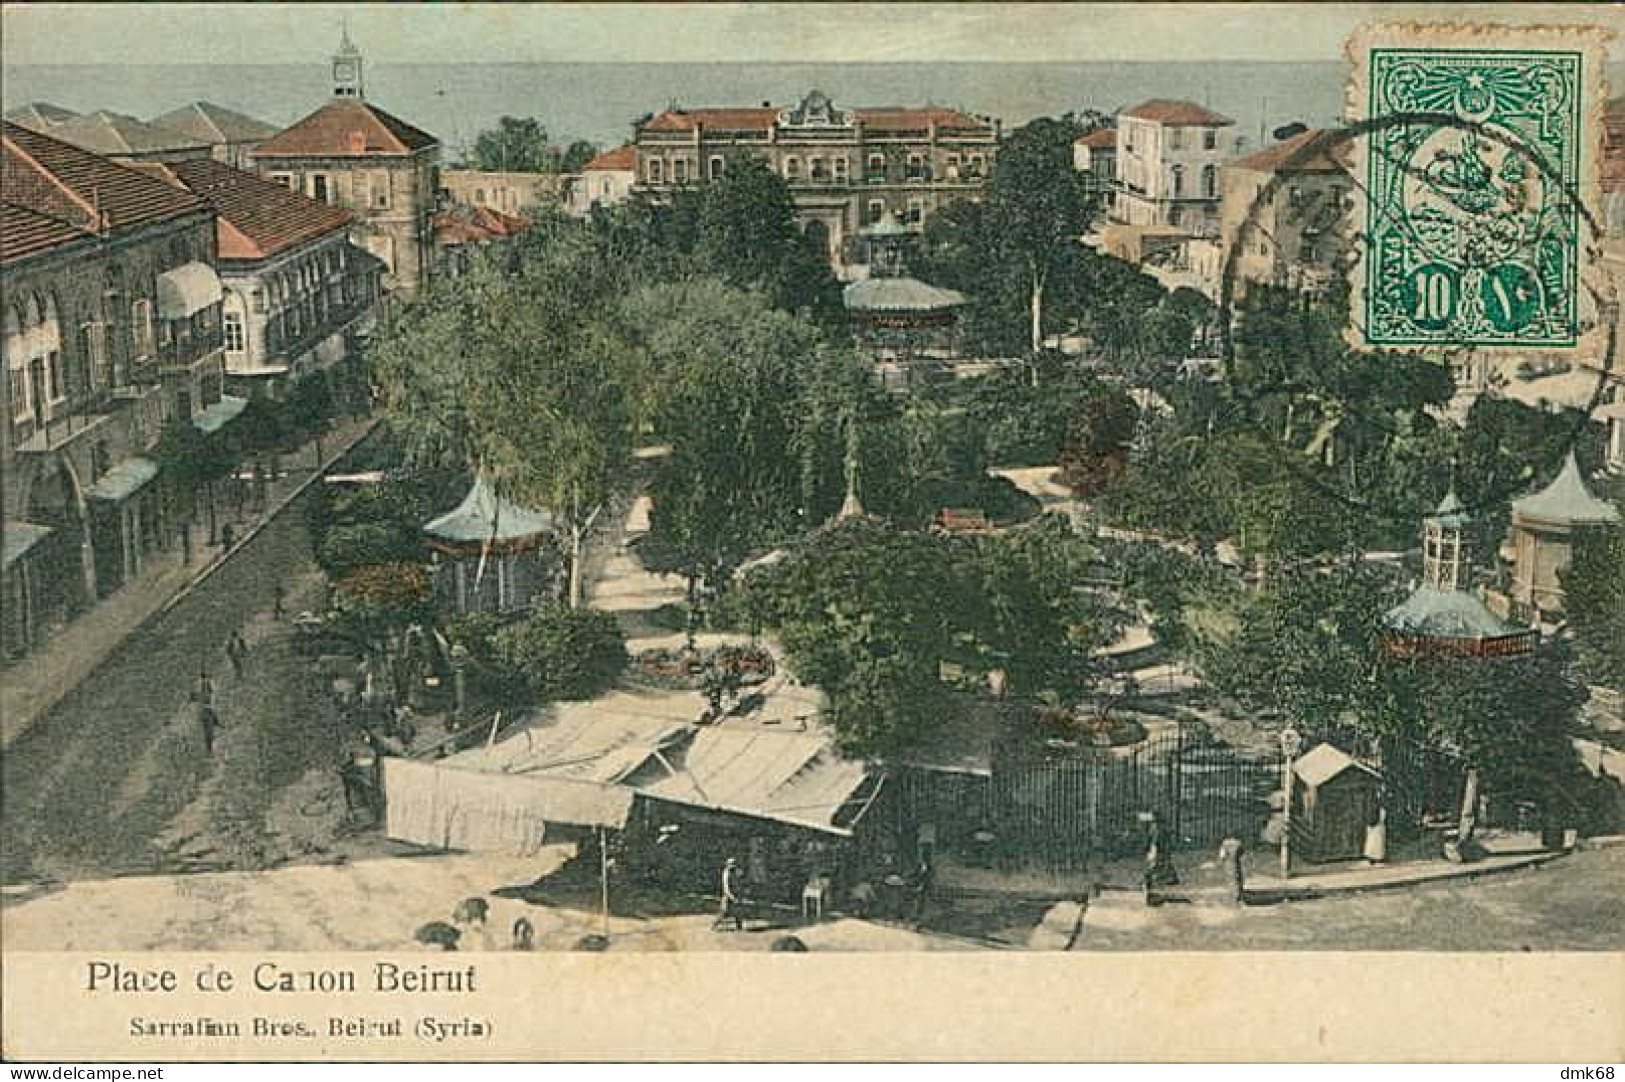 LEBANON - BEYROUTH / BEIRUT  - PLACE DE CANON - EDIT SERRAFIAN BROS. - 1909 / STAMP / POSTMARK  (18387) - Liban